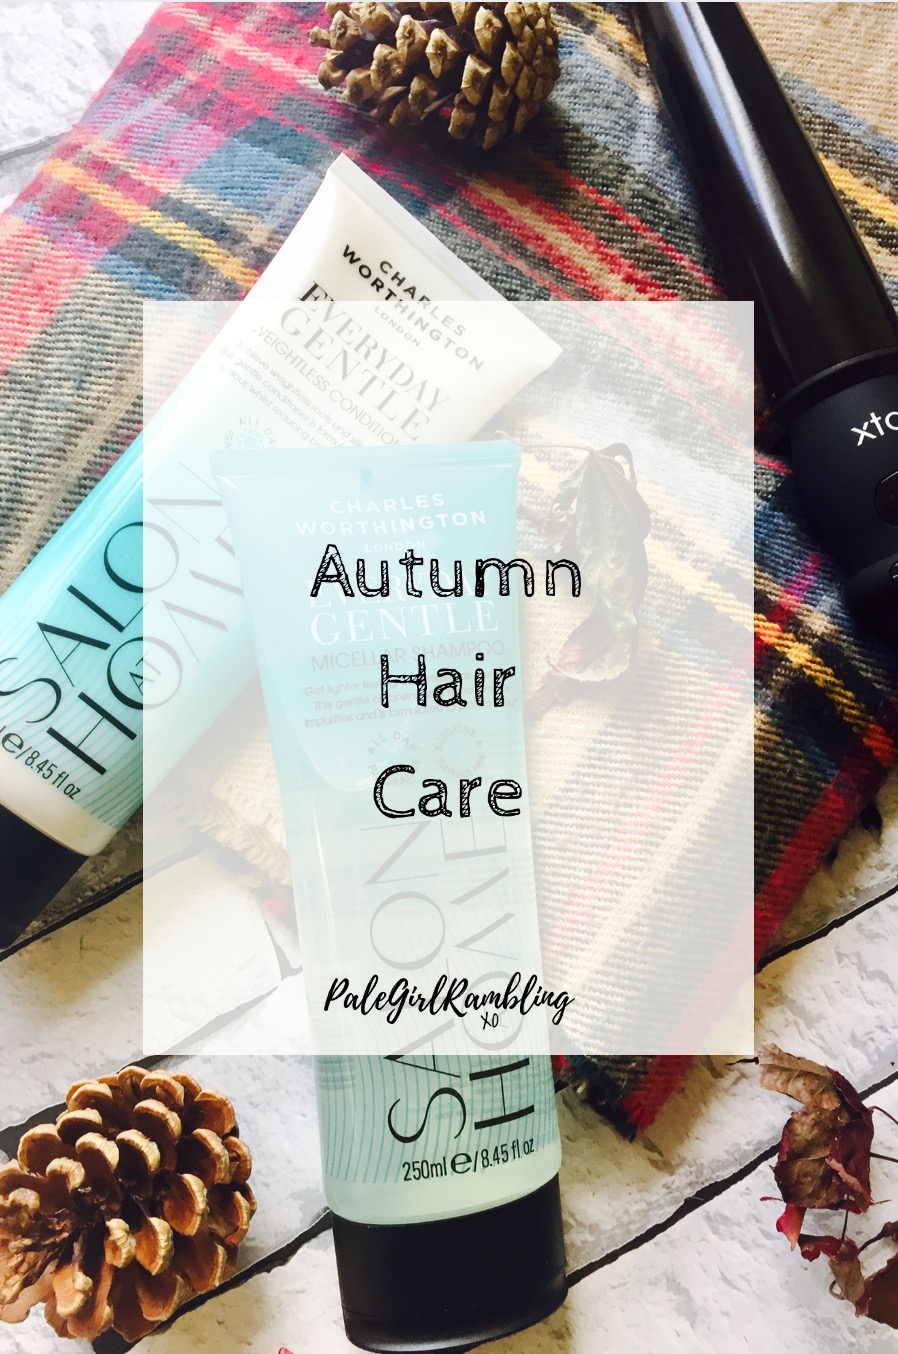 Autumn haircare curls xtava giveaway Charles worthington shampoo conditioner